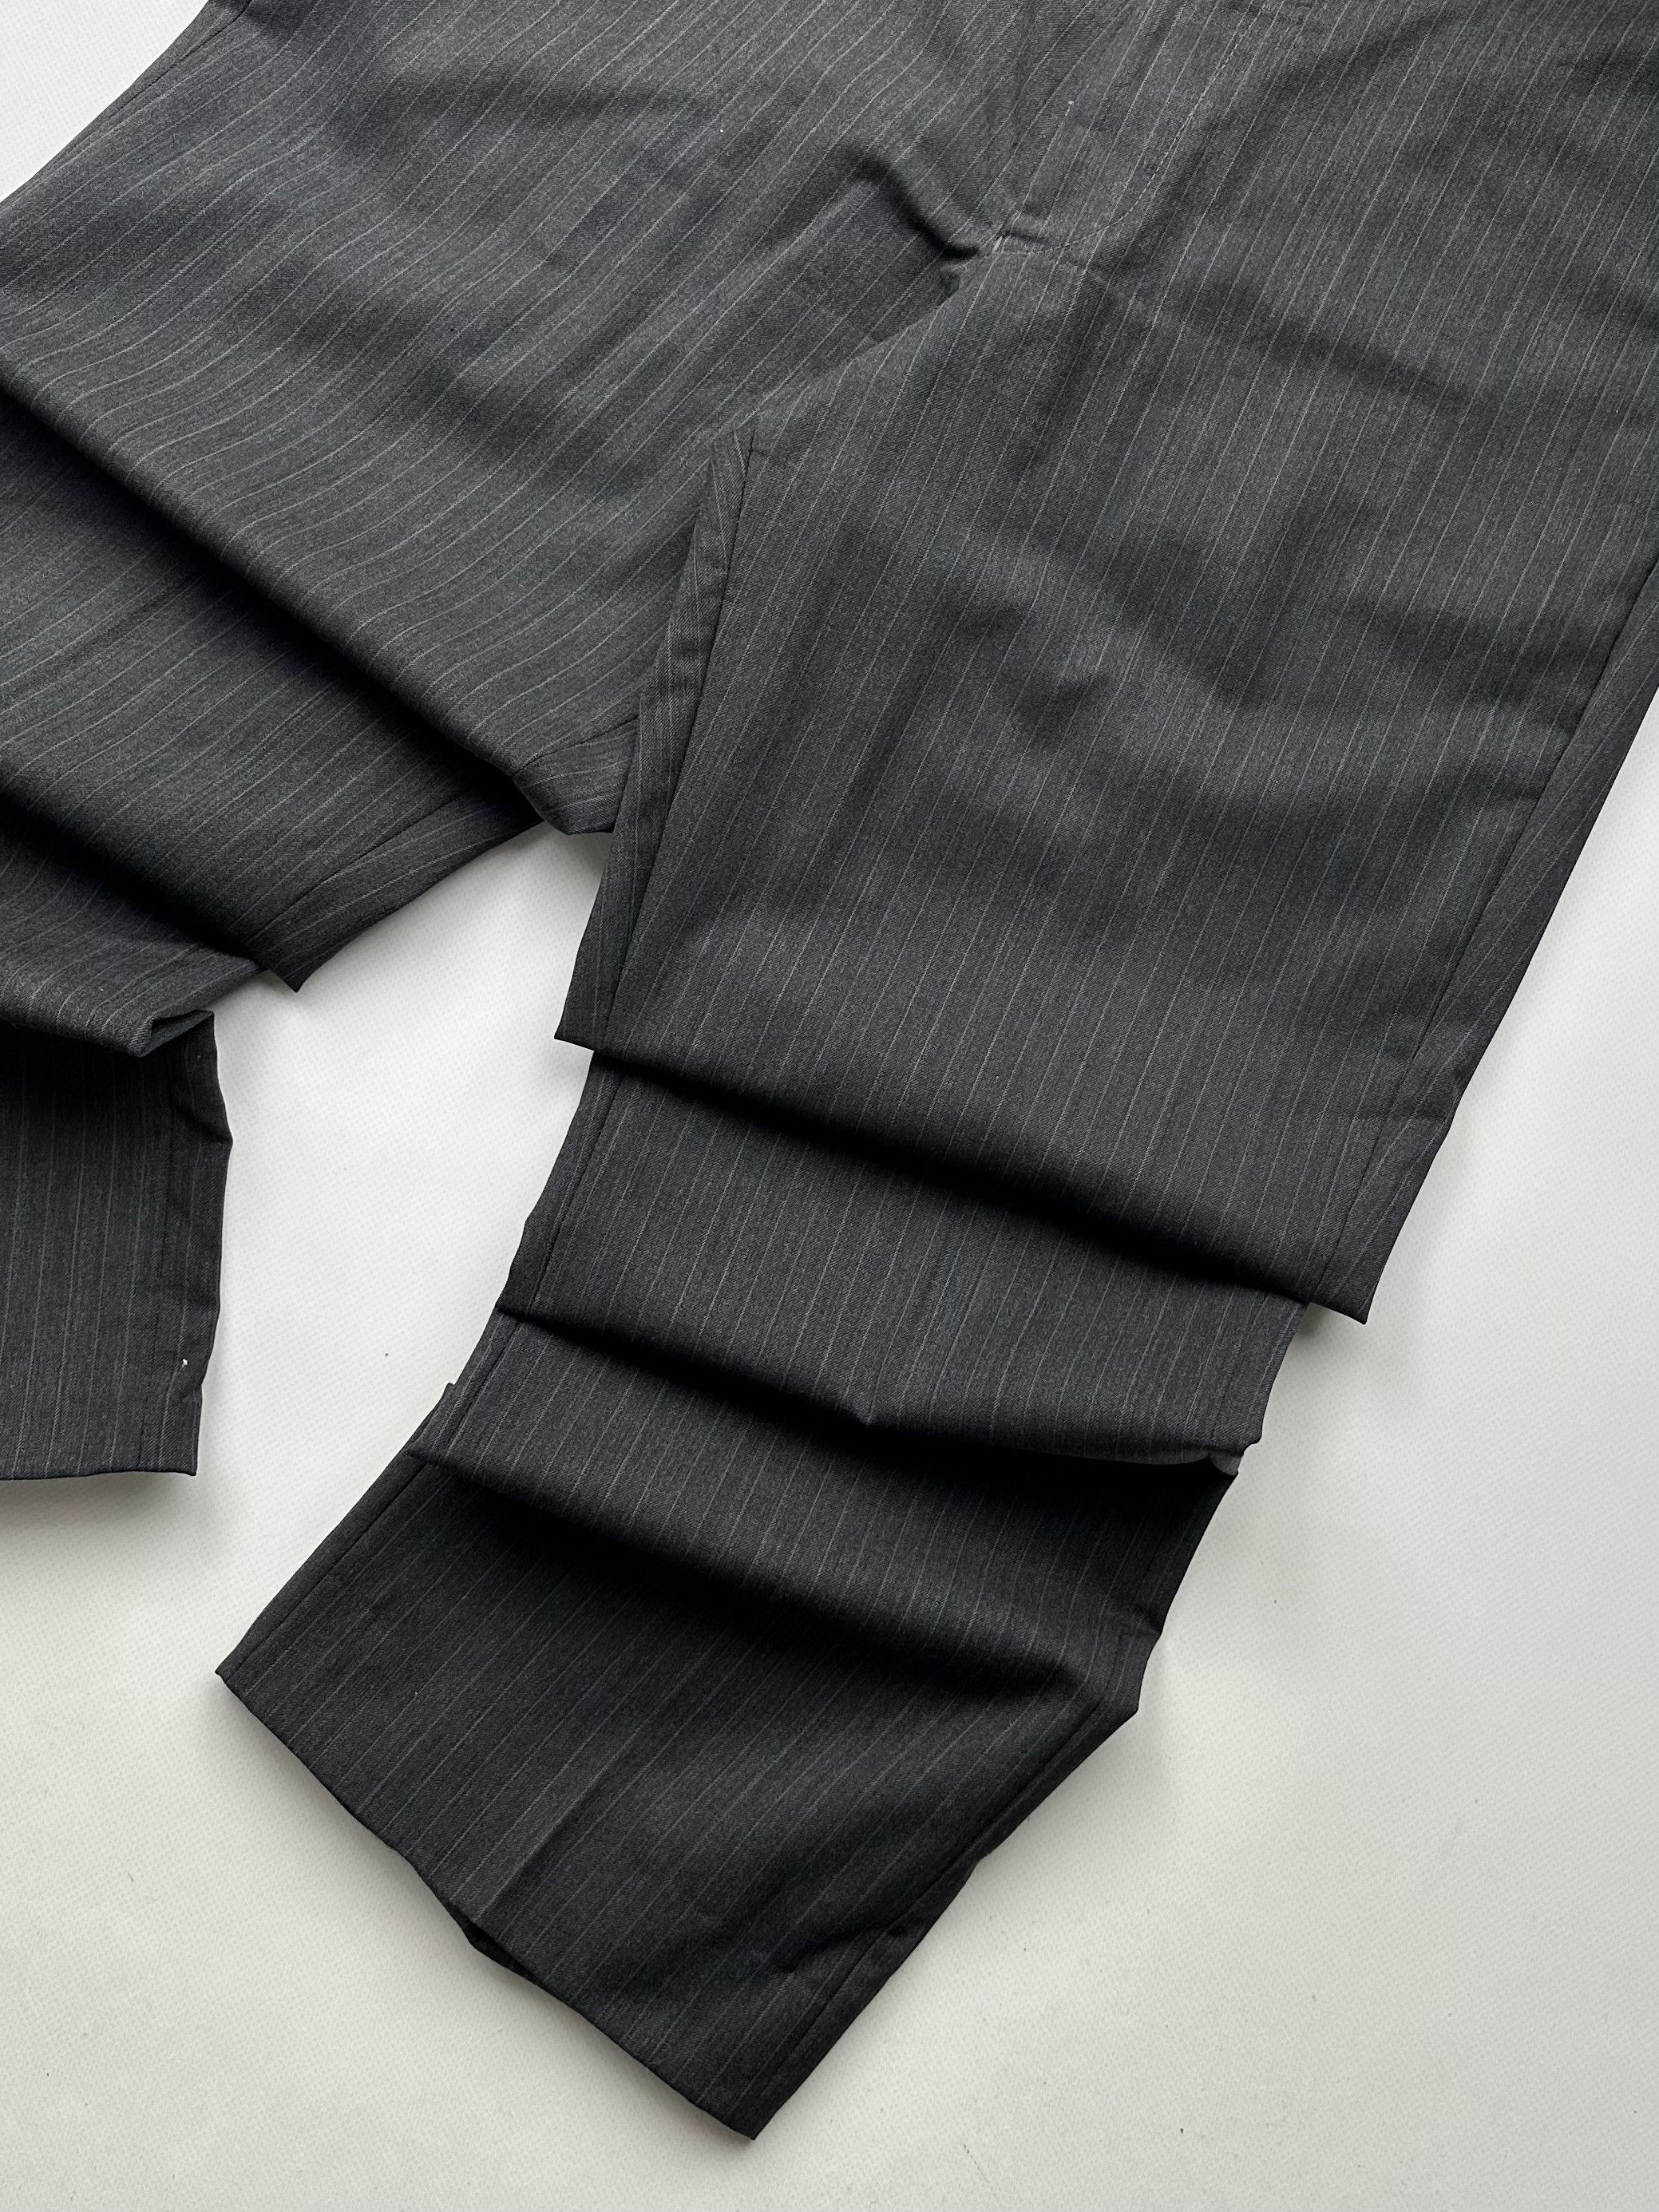 Vintage Yves Saint Laurent Vintage Wool Striped Pants Size US 34 / EU 50 - 4 Thumbnail